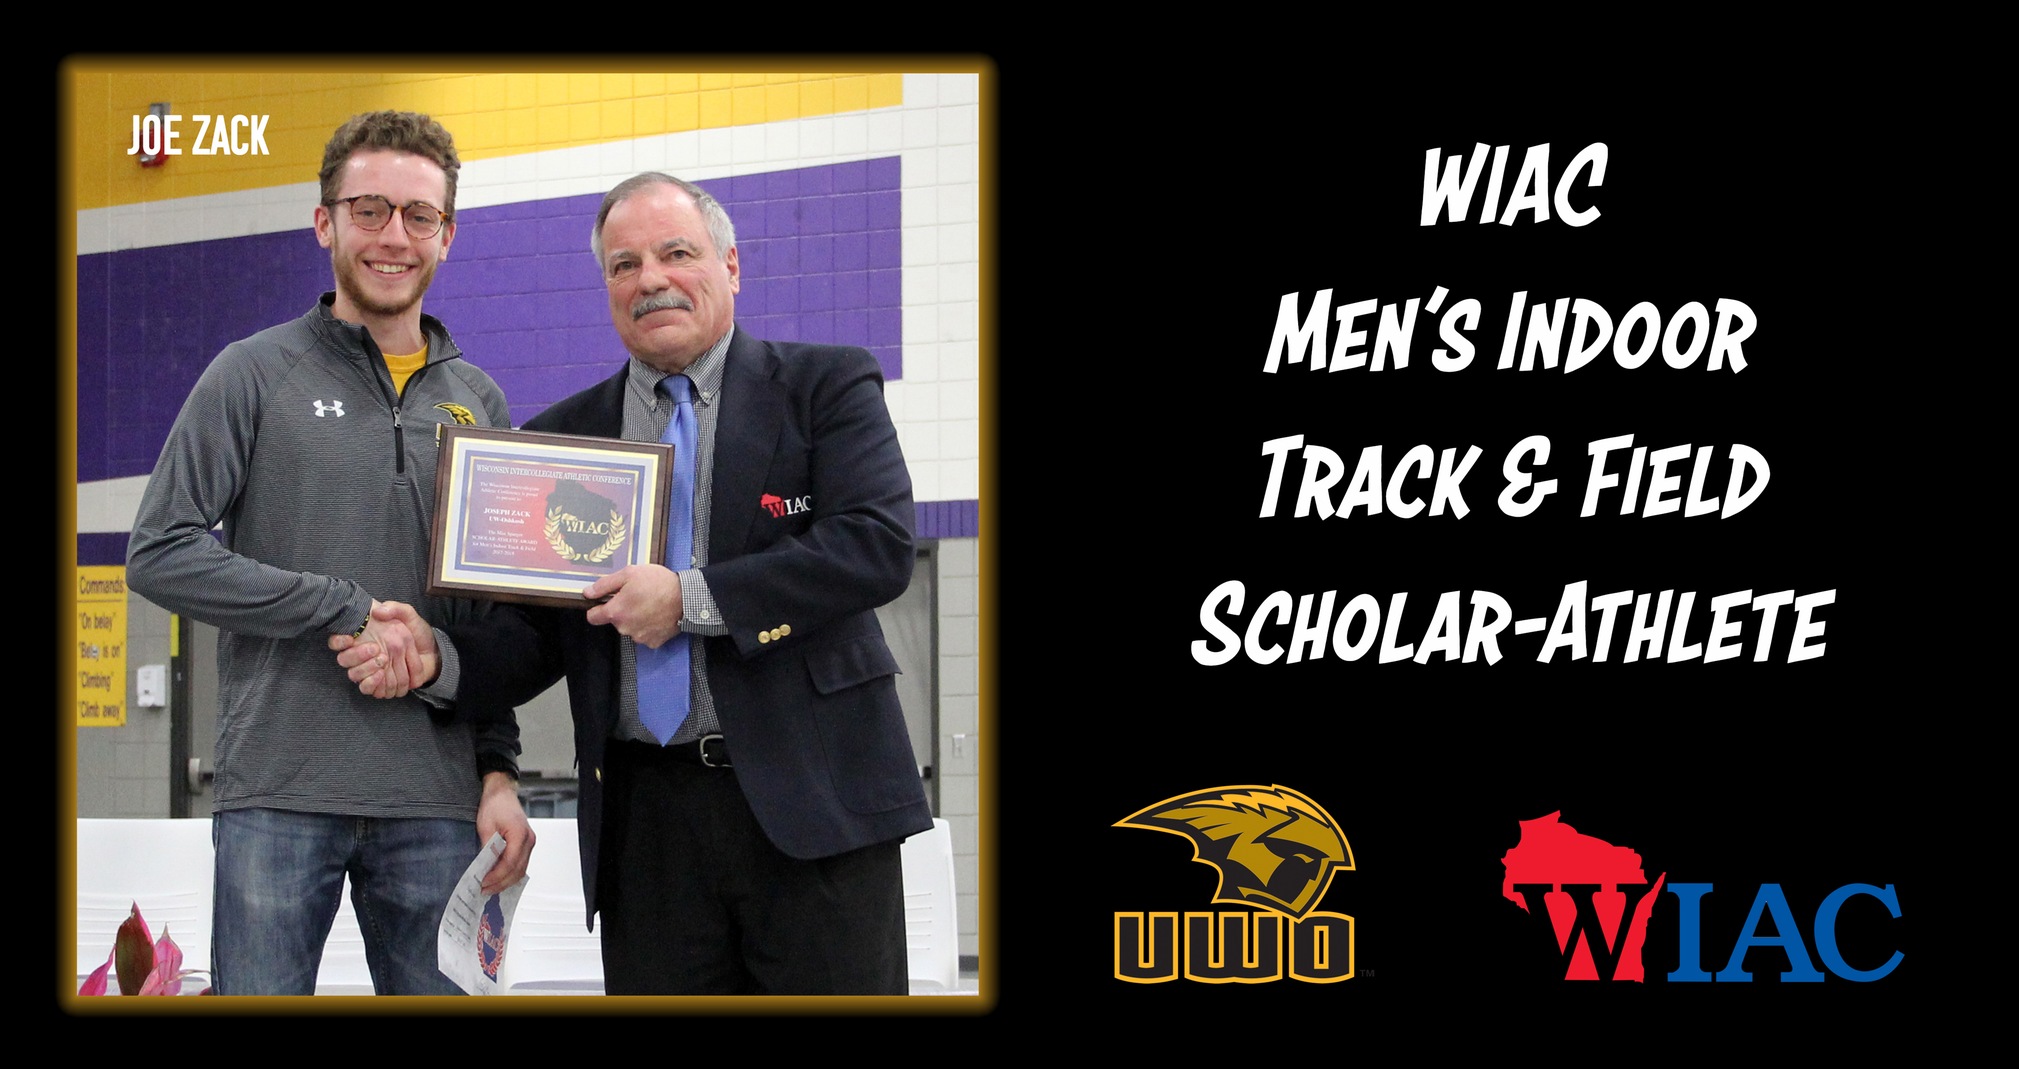 Zack Named WIAC Men's Indoor Track & Field Scholar-Athlete Award Winner